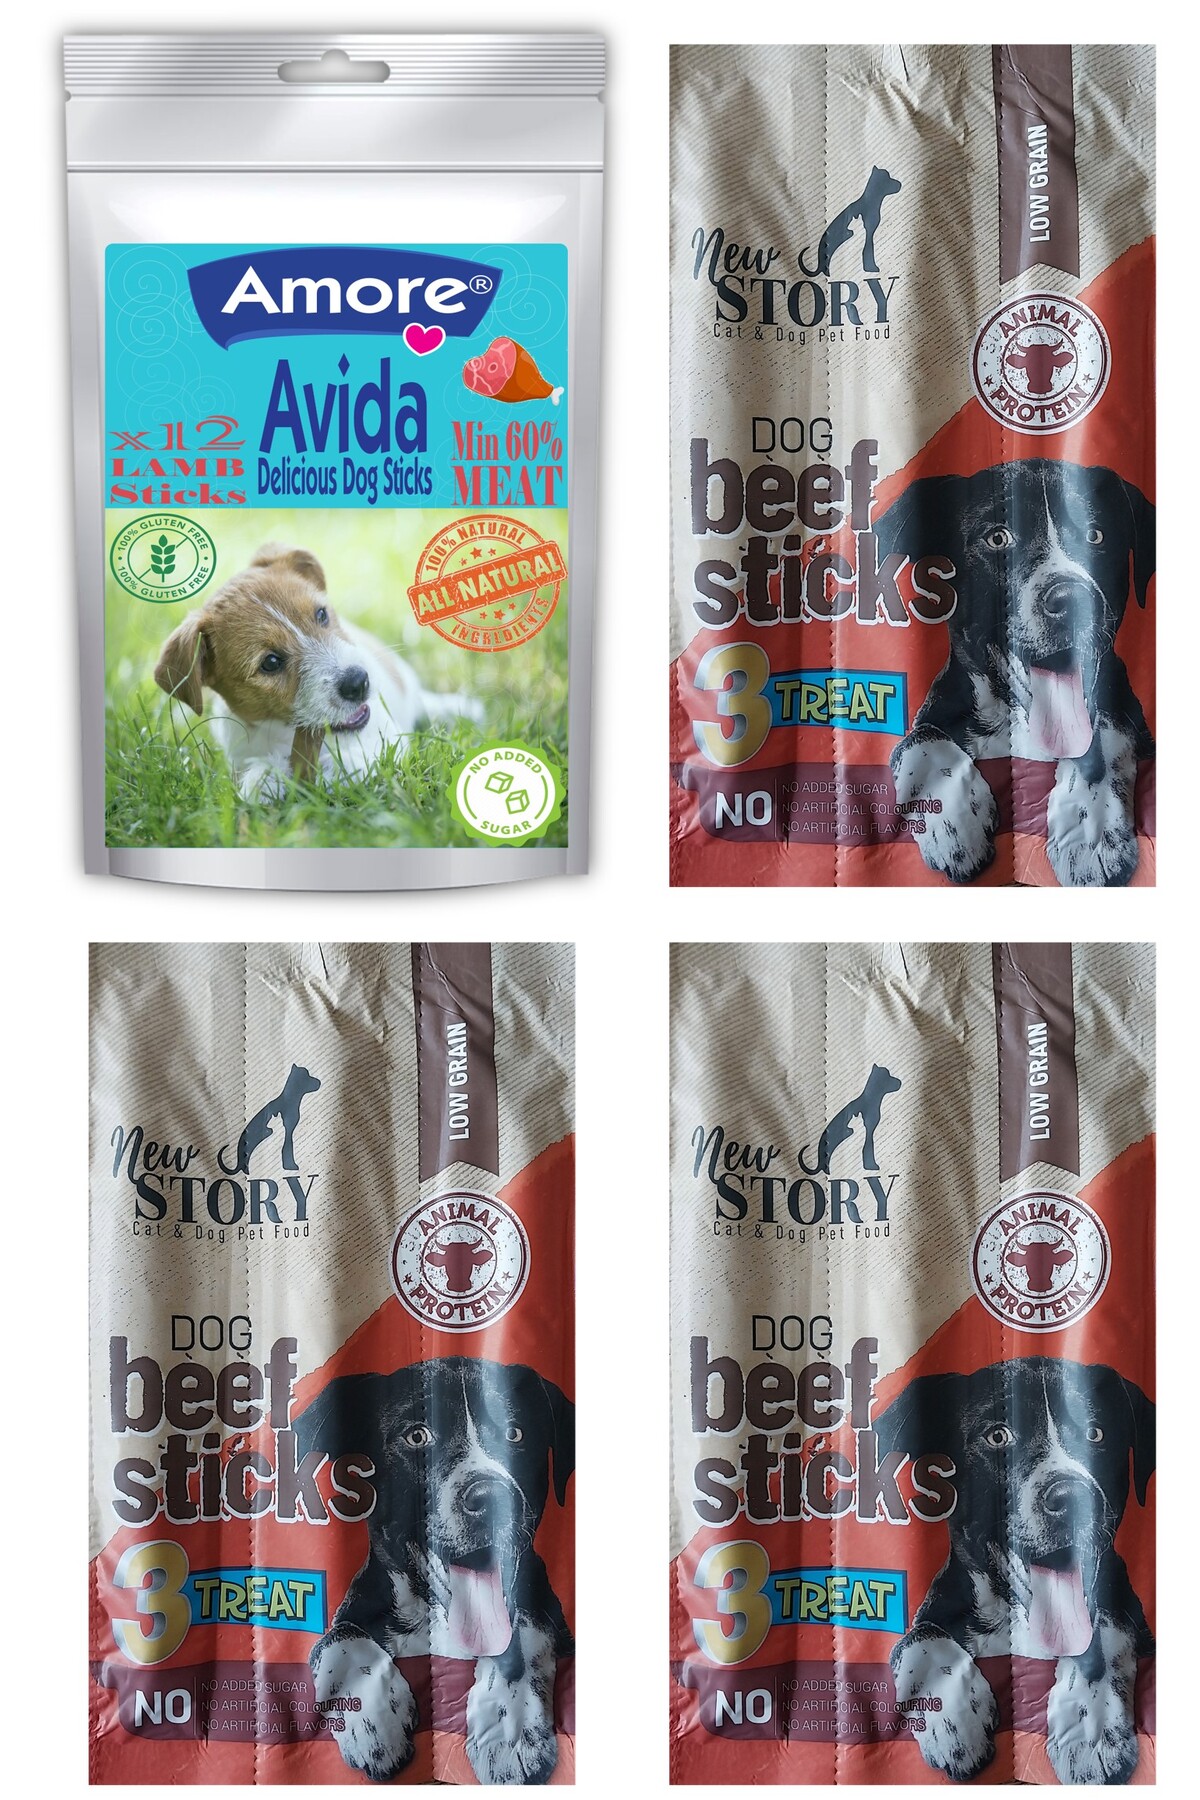 Amoredog Avida Lamb 12li Kopek Kuzu Etli Odul Sticks, New Story Beef Sticks Extra 3 Adet 3lu 11gr